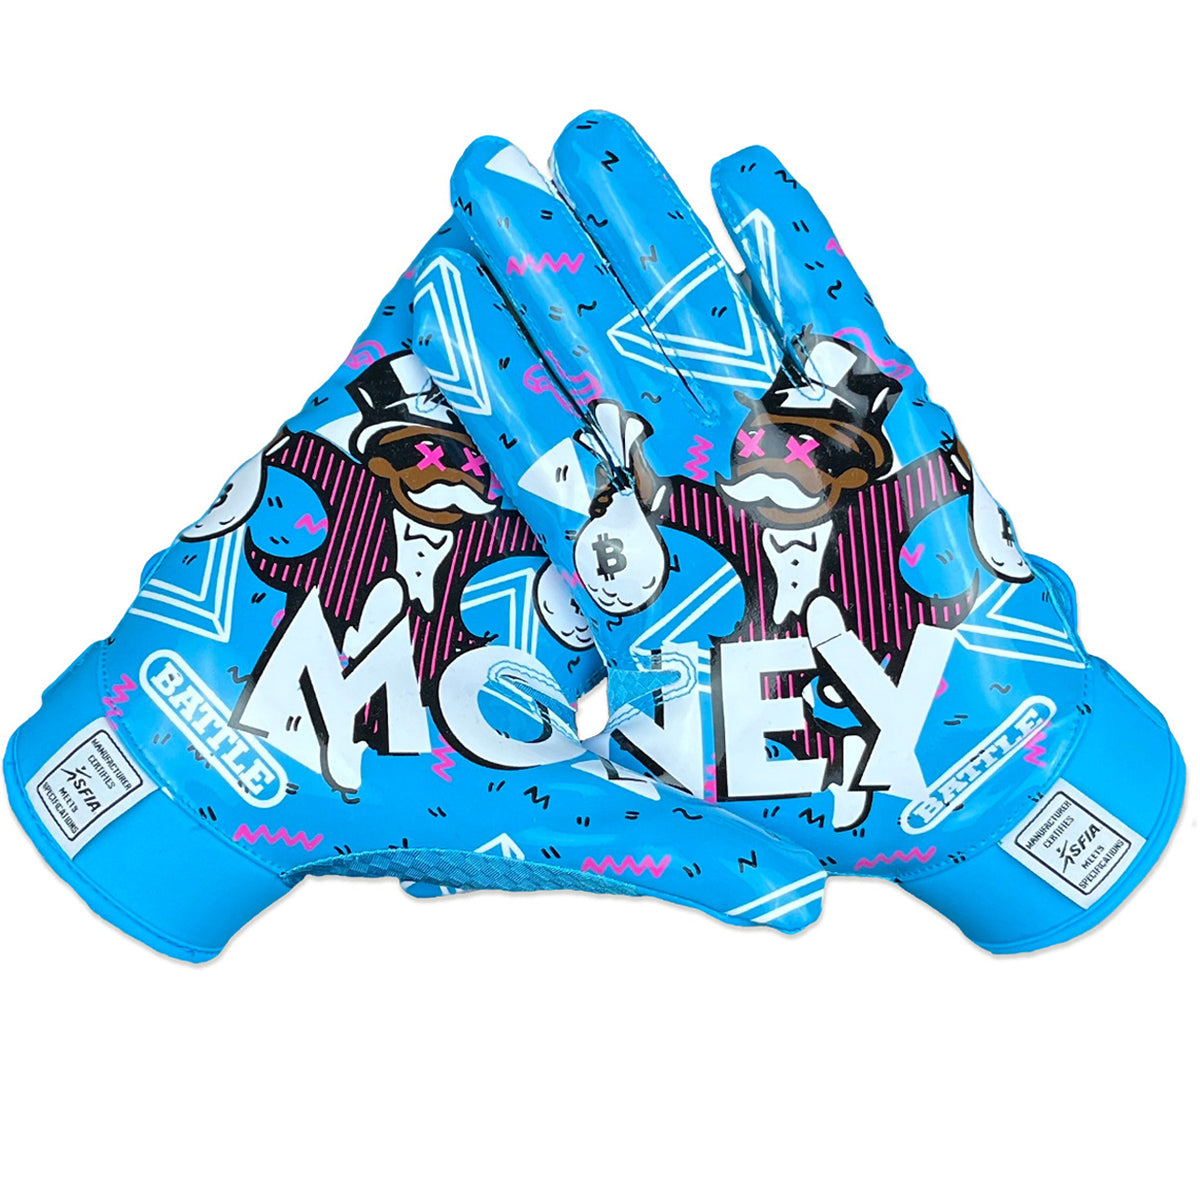 Battle Sports Adult Money Man 2.0 Football Receiver Gloves - Neon Blue Battle Sports